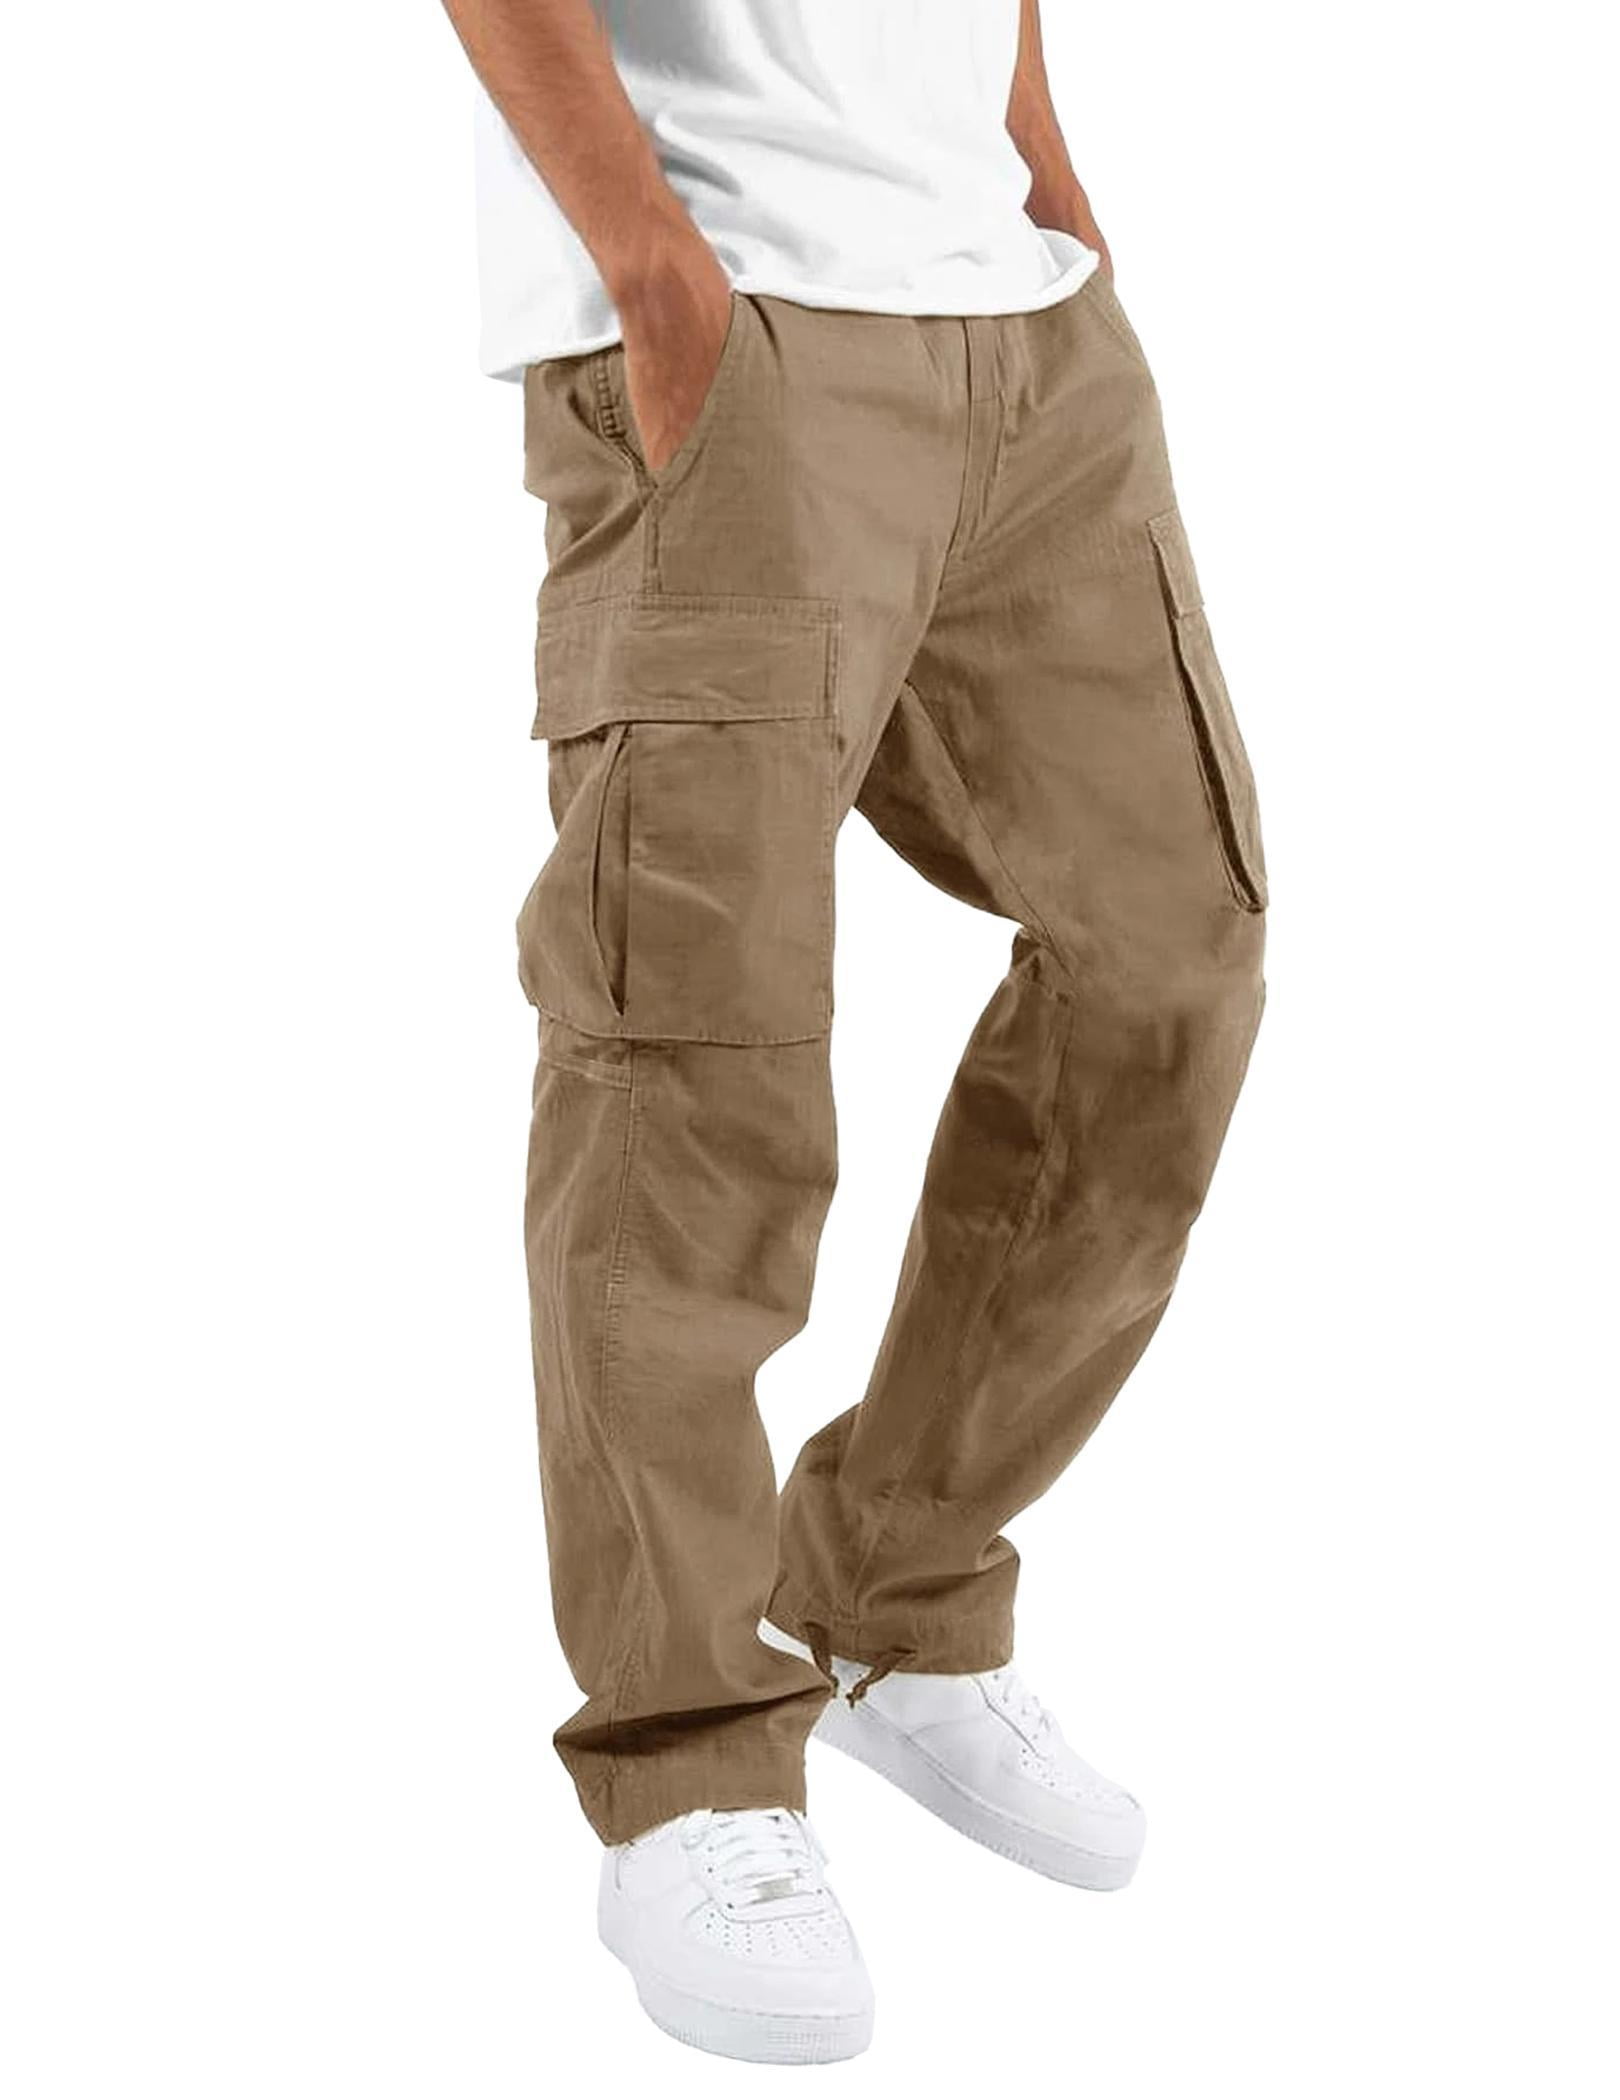  Deyeek Mens Baggy Sweatpants with Pockets Lightweight